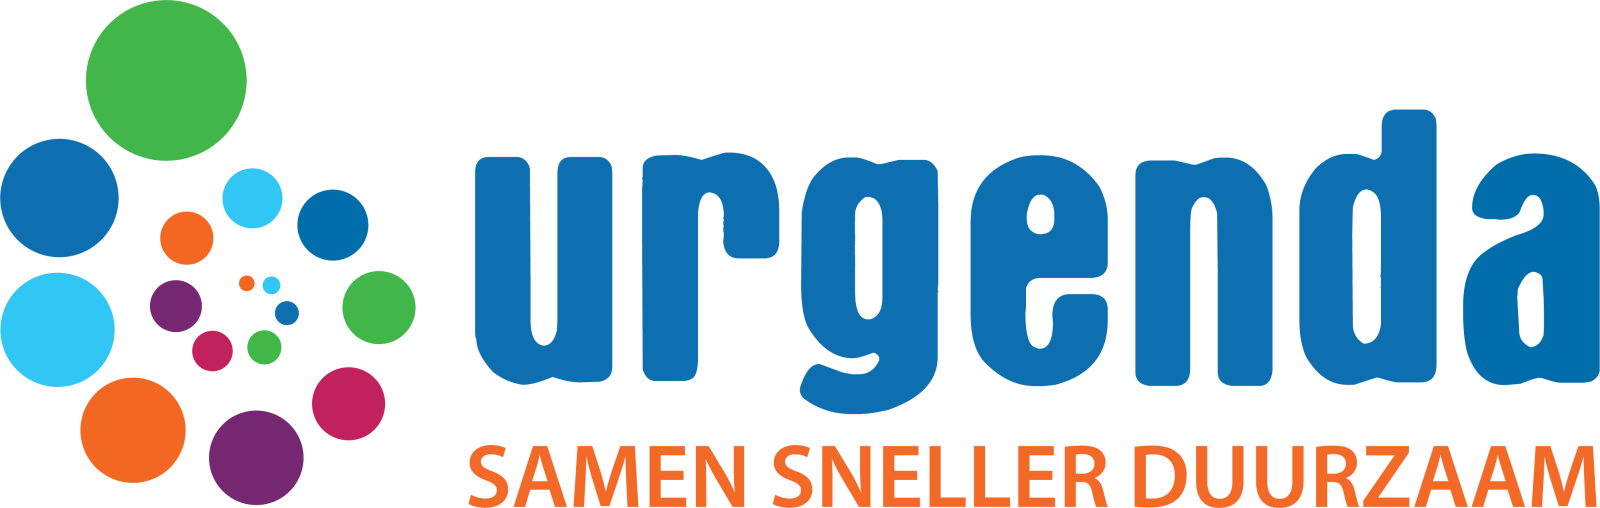 Logo Urgenda